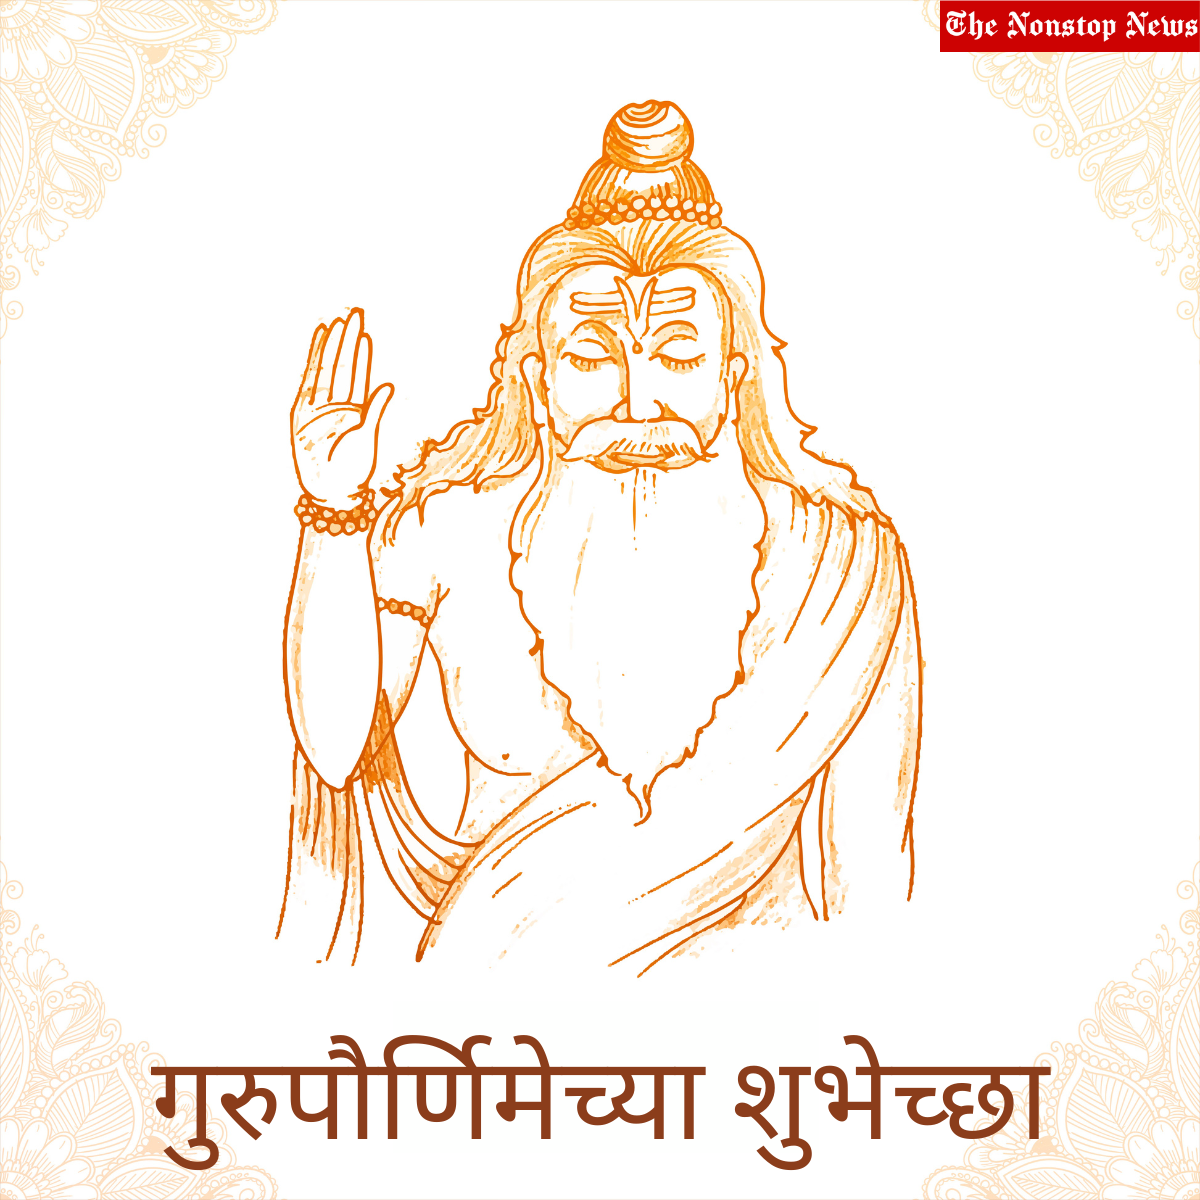 Happy Guru Purnima 2022: Best Marathi Wishes, Quotes, Greetings, Messages, Images, Shayari to Share